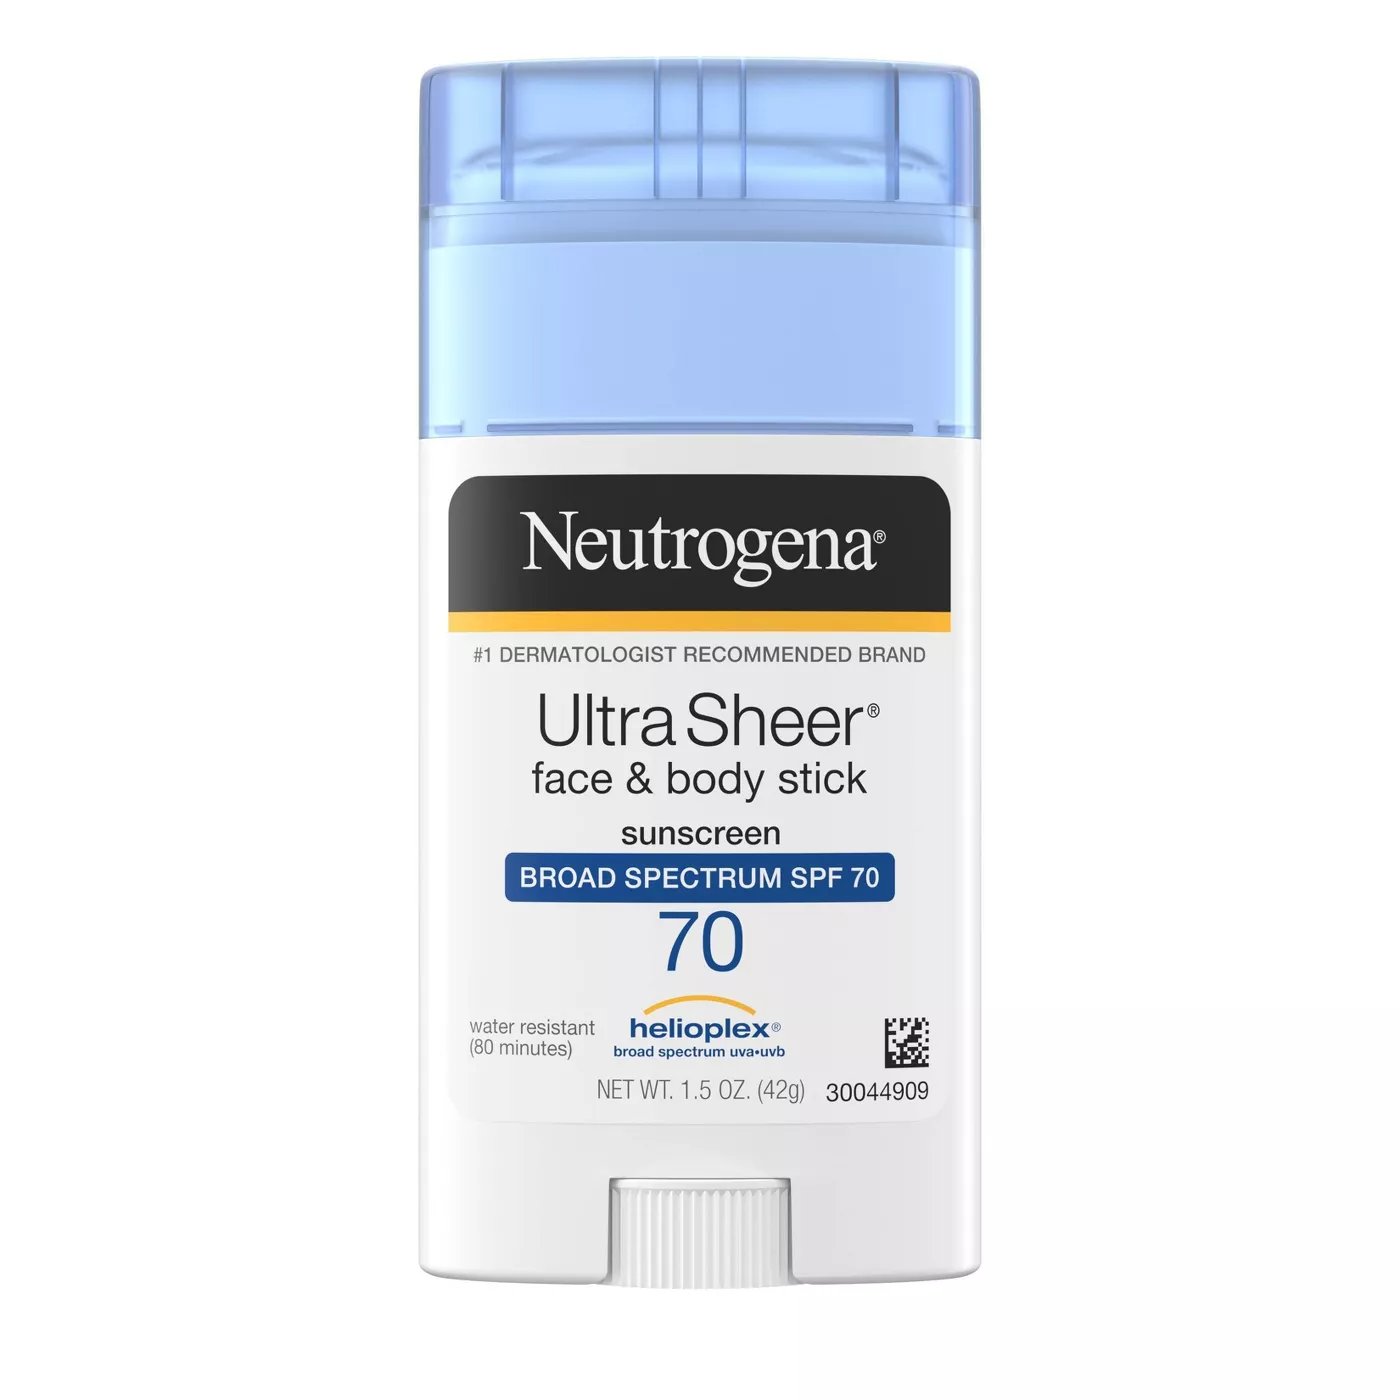 Neutrogena Ultra Sheer Face & Body Stick